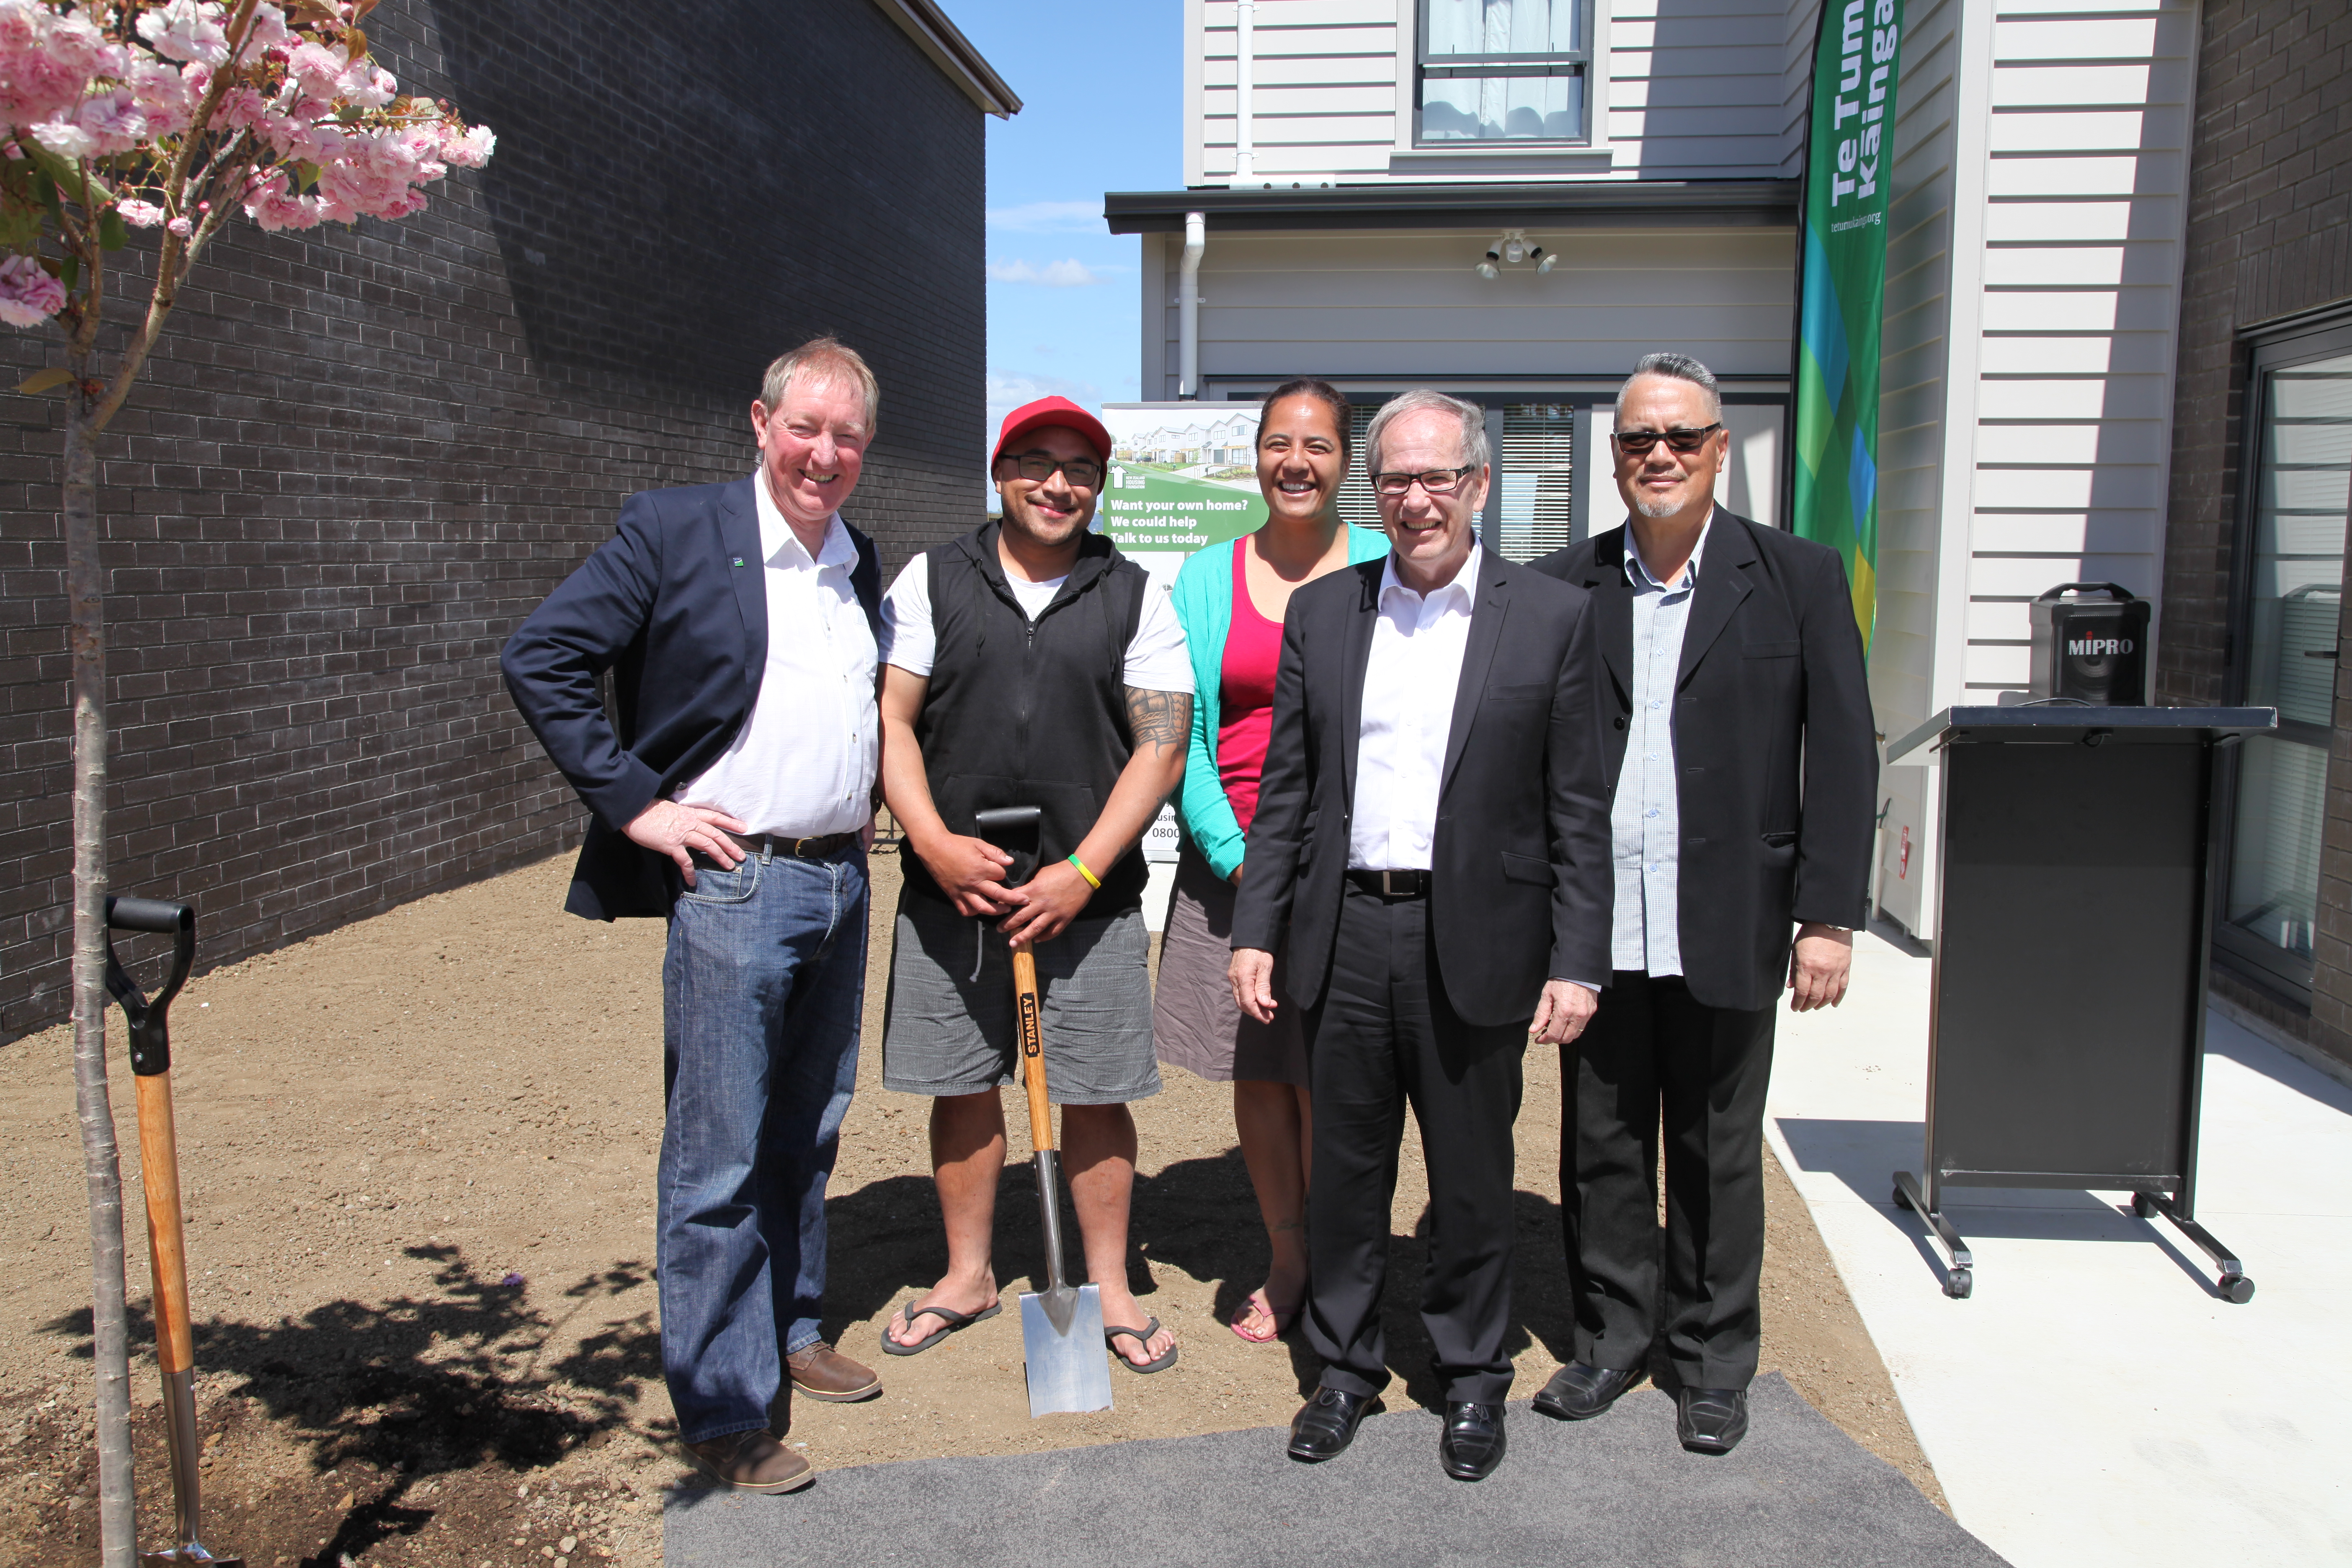 Nick Smith Minister of Housing, George Schwenke & Kesa Edwards (new residents), Len Brown, Joe Wilson of Te Akitai Waiohua